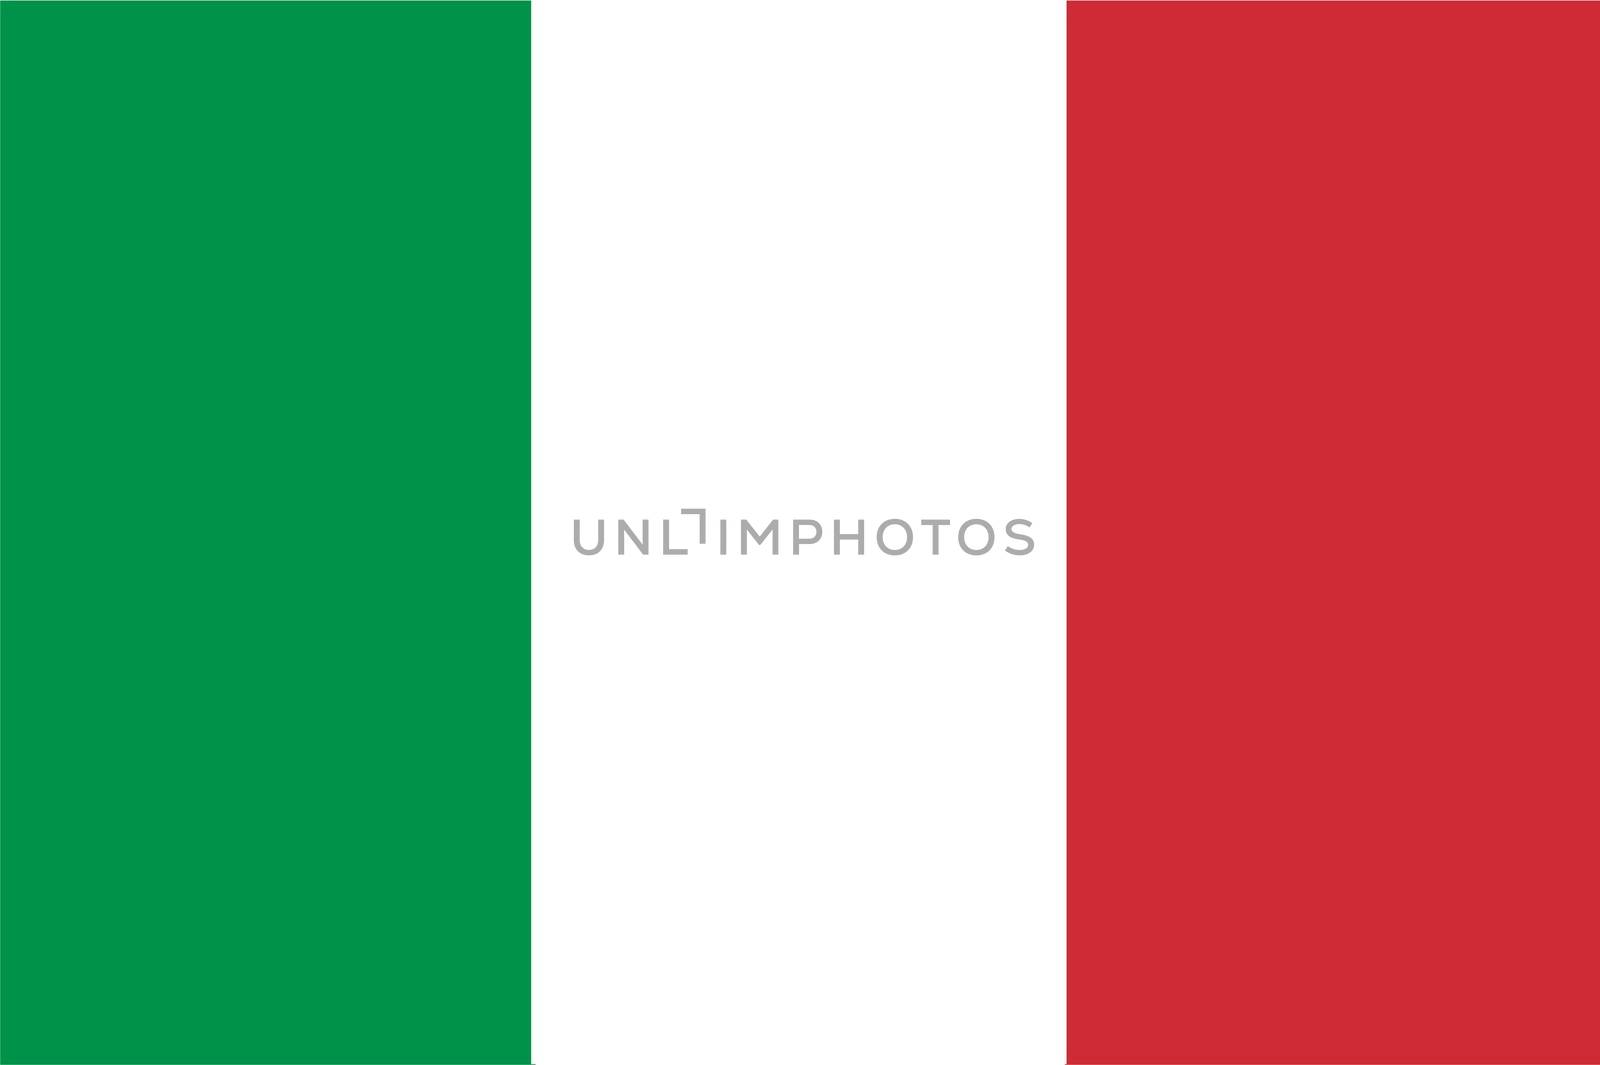 Italian flag isolated illustration